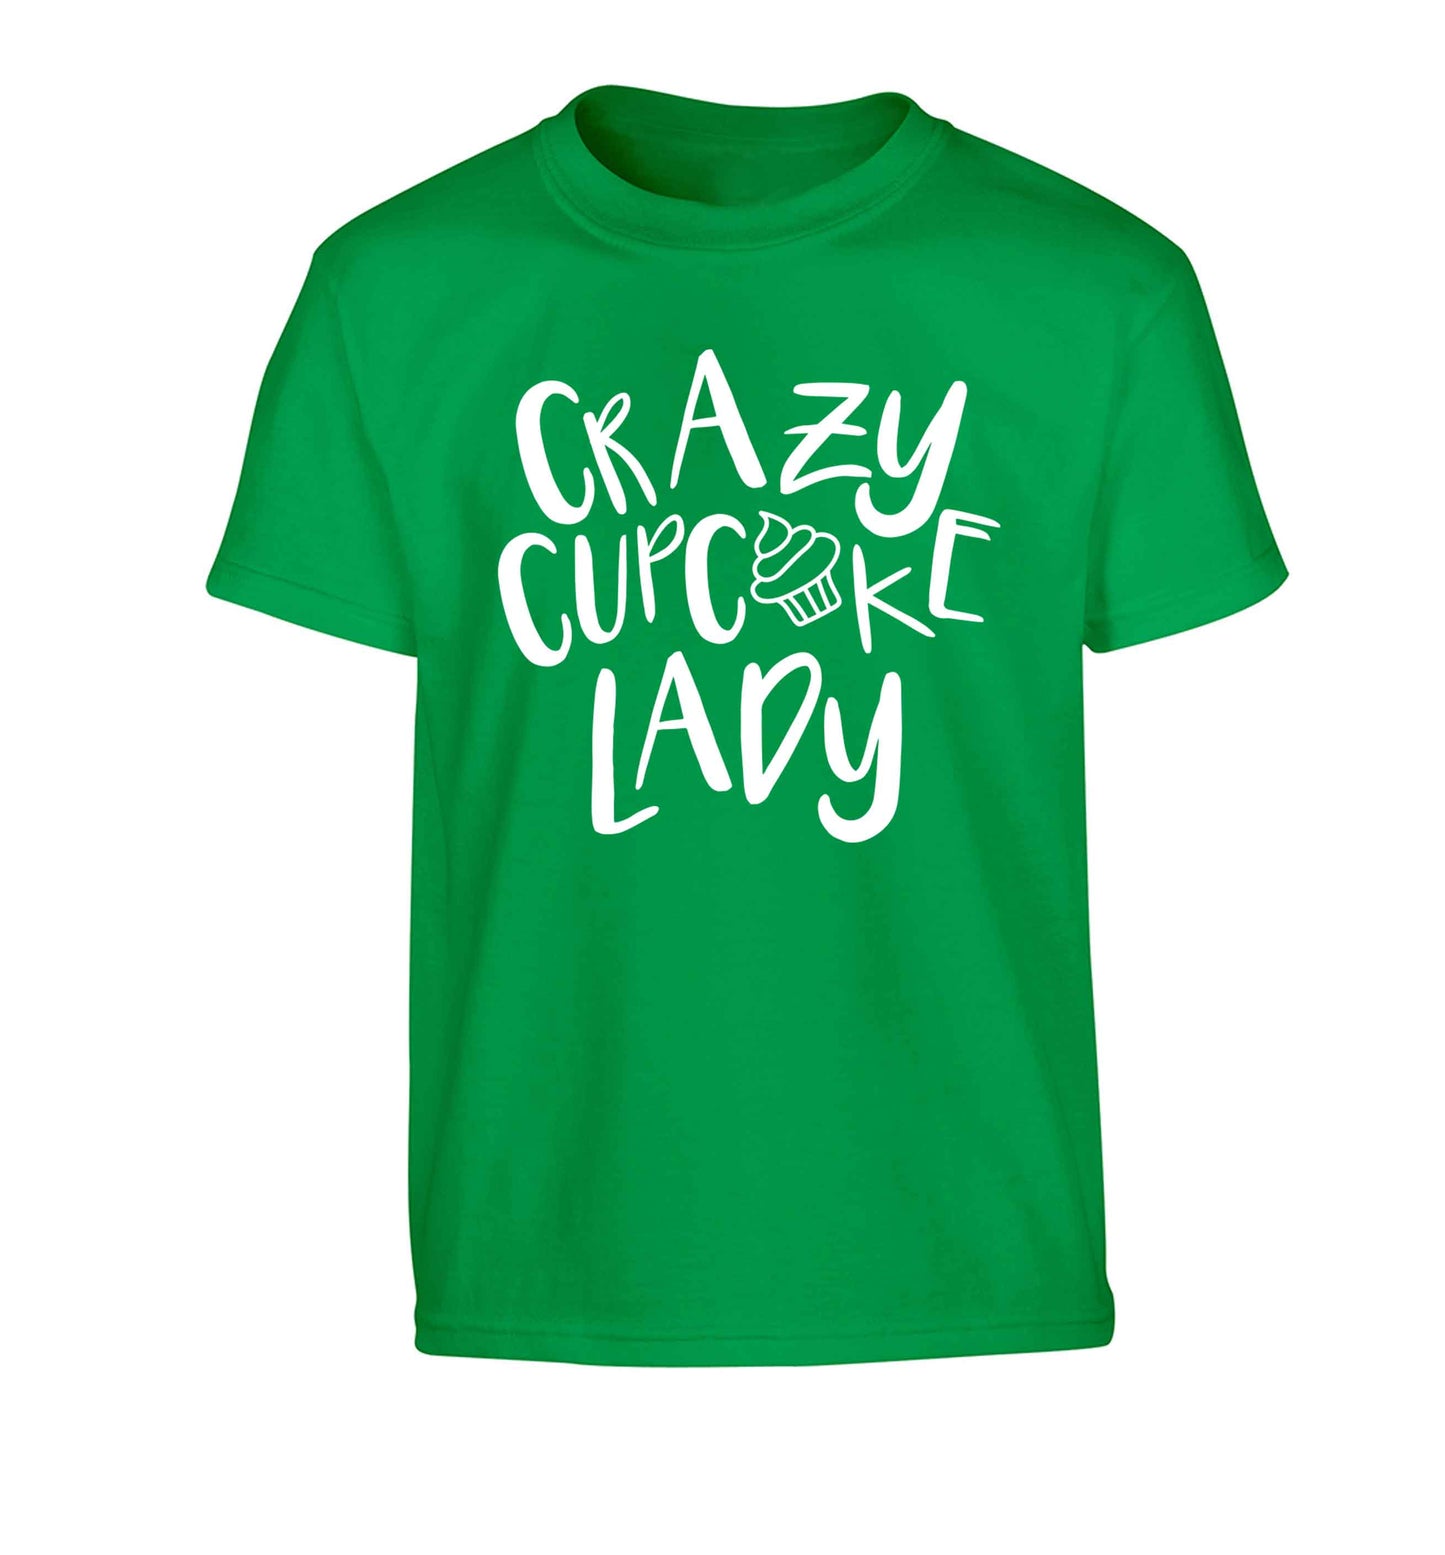 Crazy cupcake lady Children's green Tshirt 12-13 Years